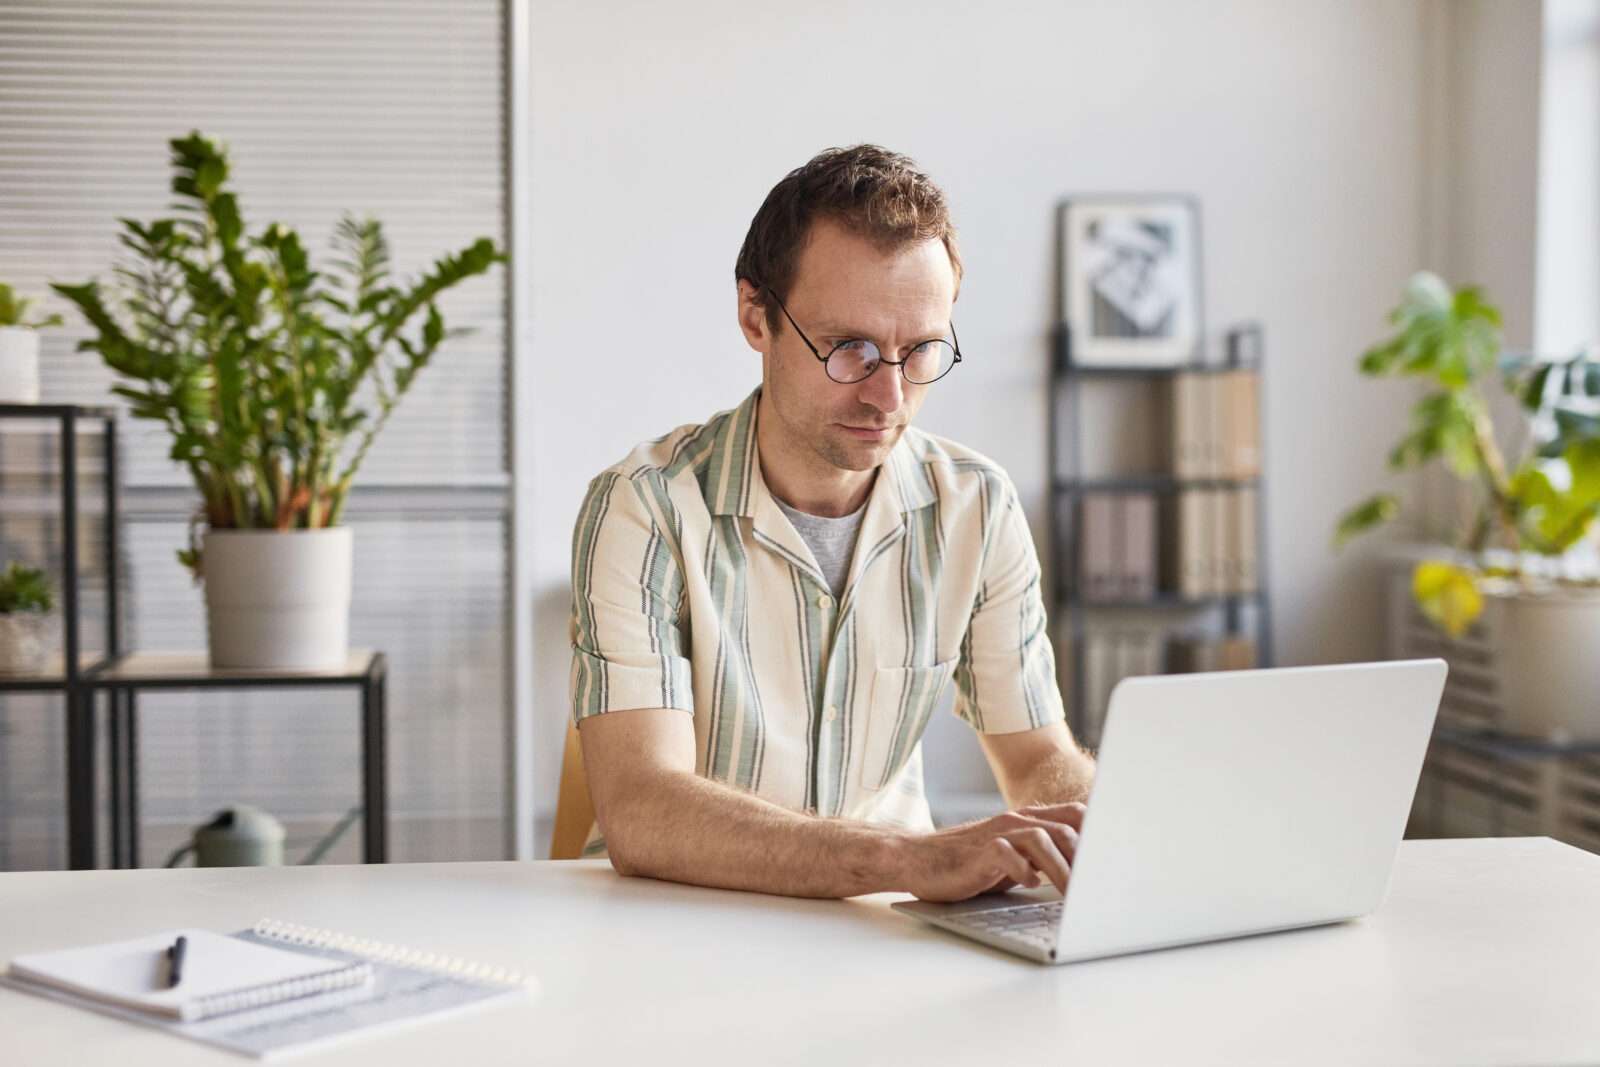 Freelancer Man Working On Laptop for earning money